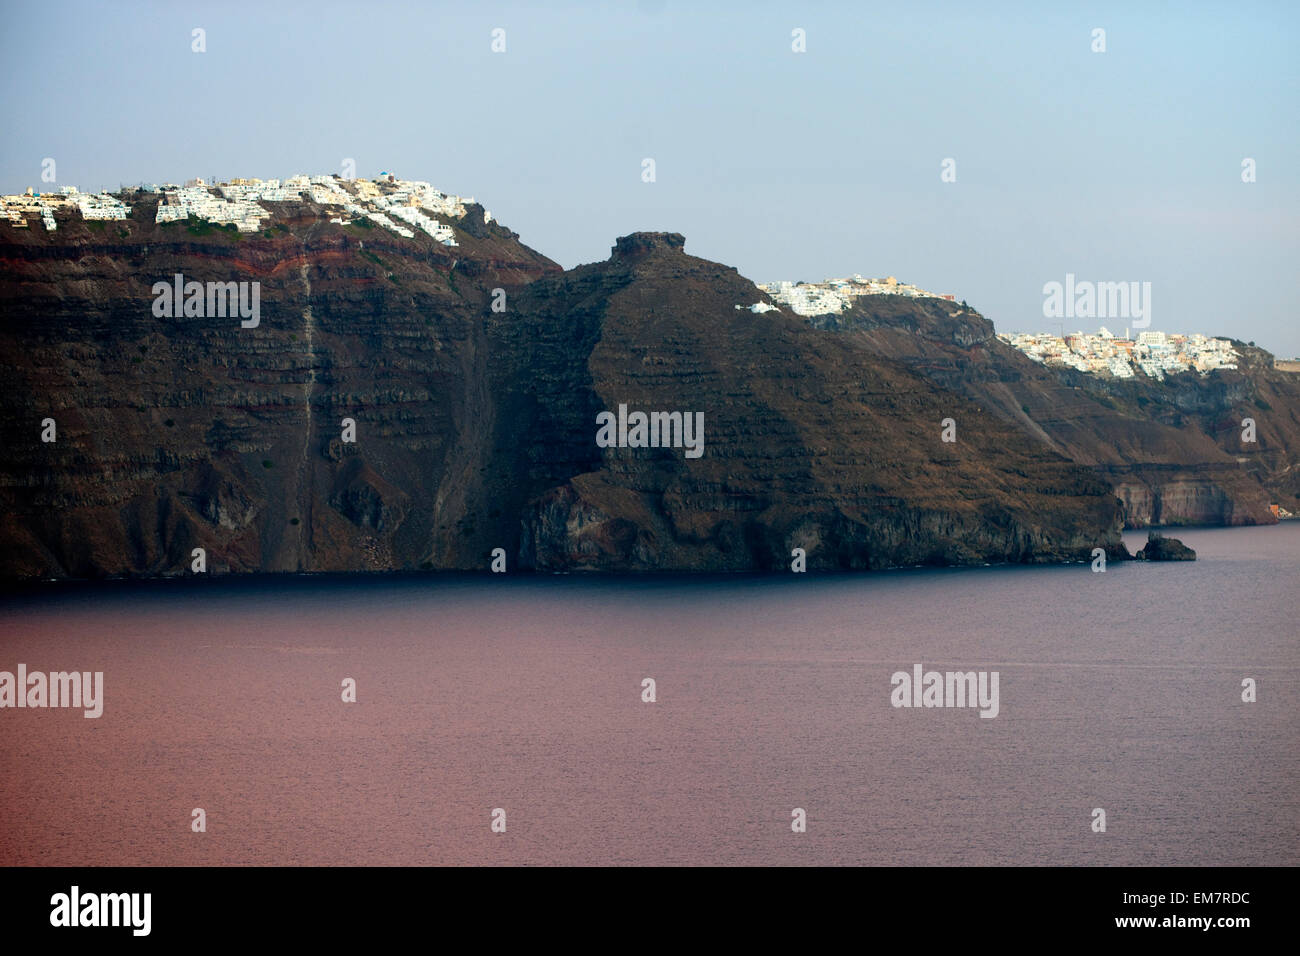 Griechenland, Kykladen, Santorini, Imerovigli, Skaros-Felsen, Firostefani und Fira, Stock Photo